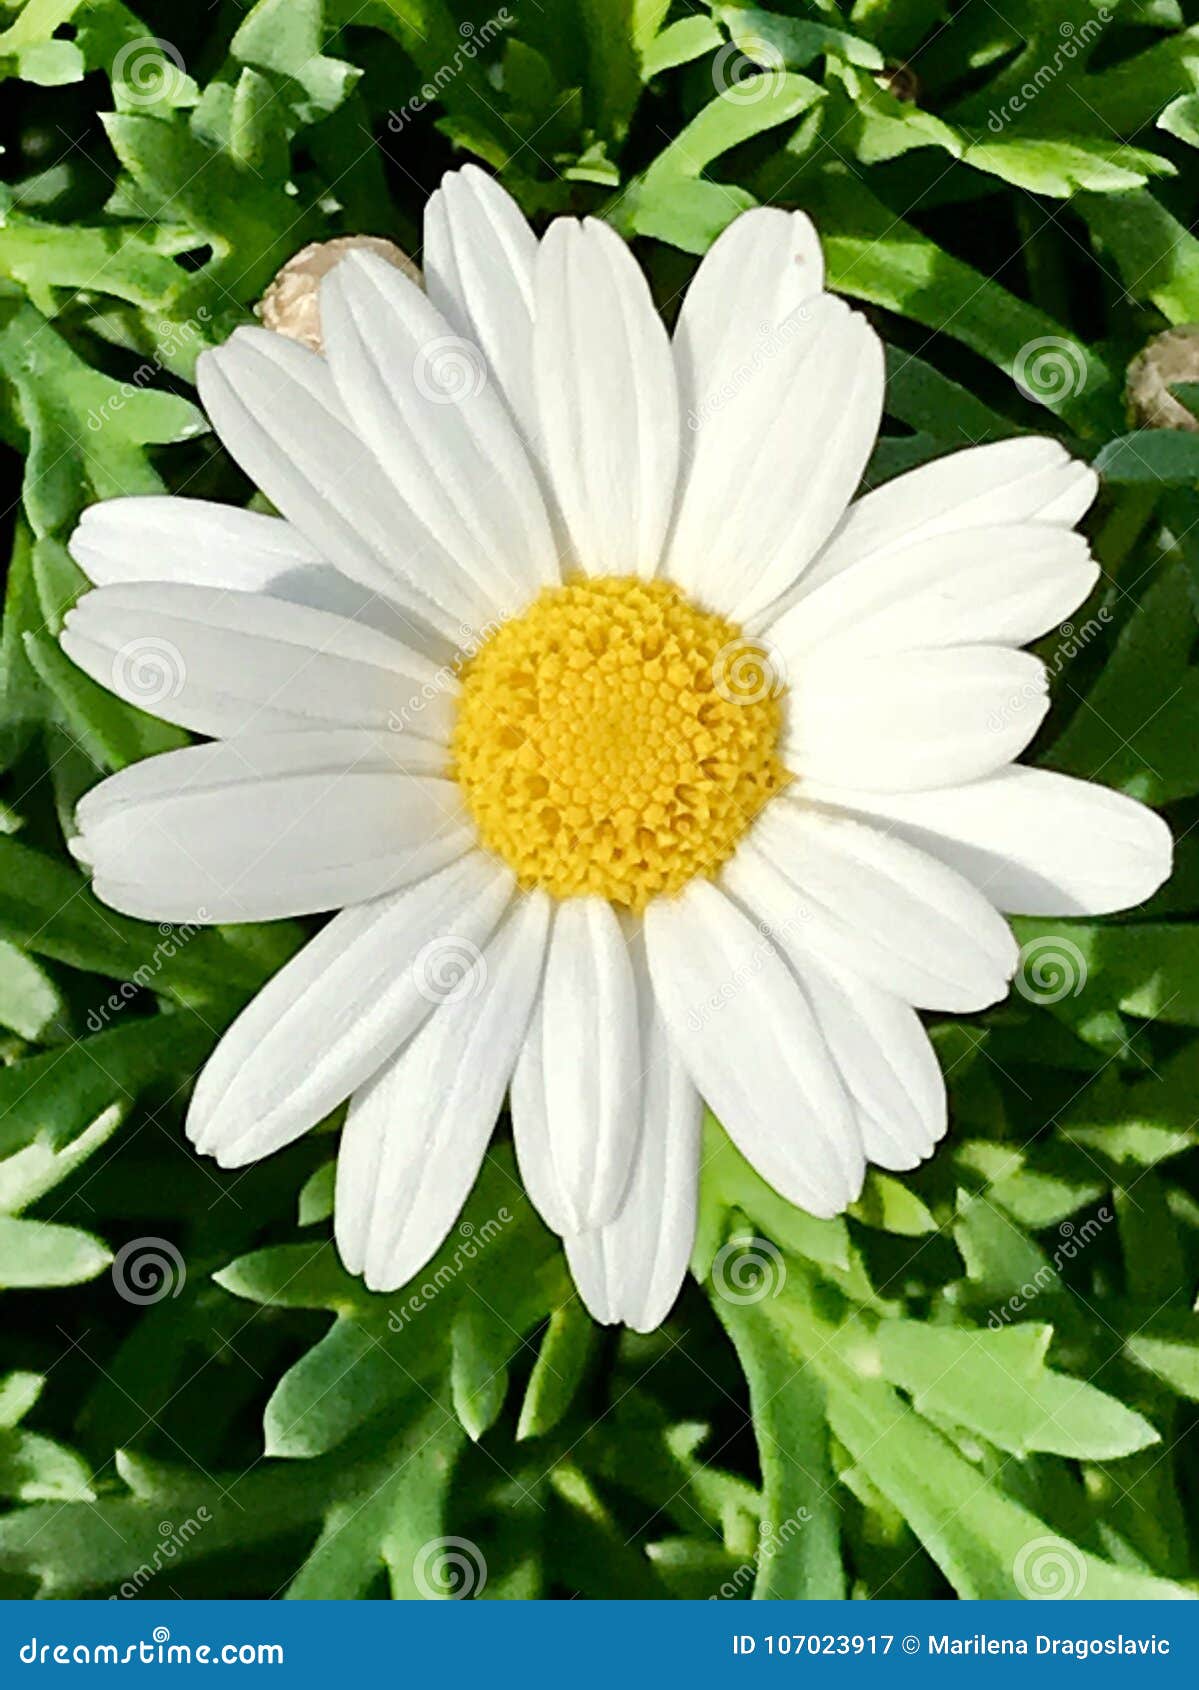 Little White Daisy In Green Grass Stock Image Image Of Flower Petal 107023917